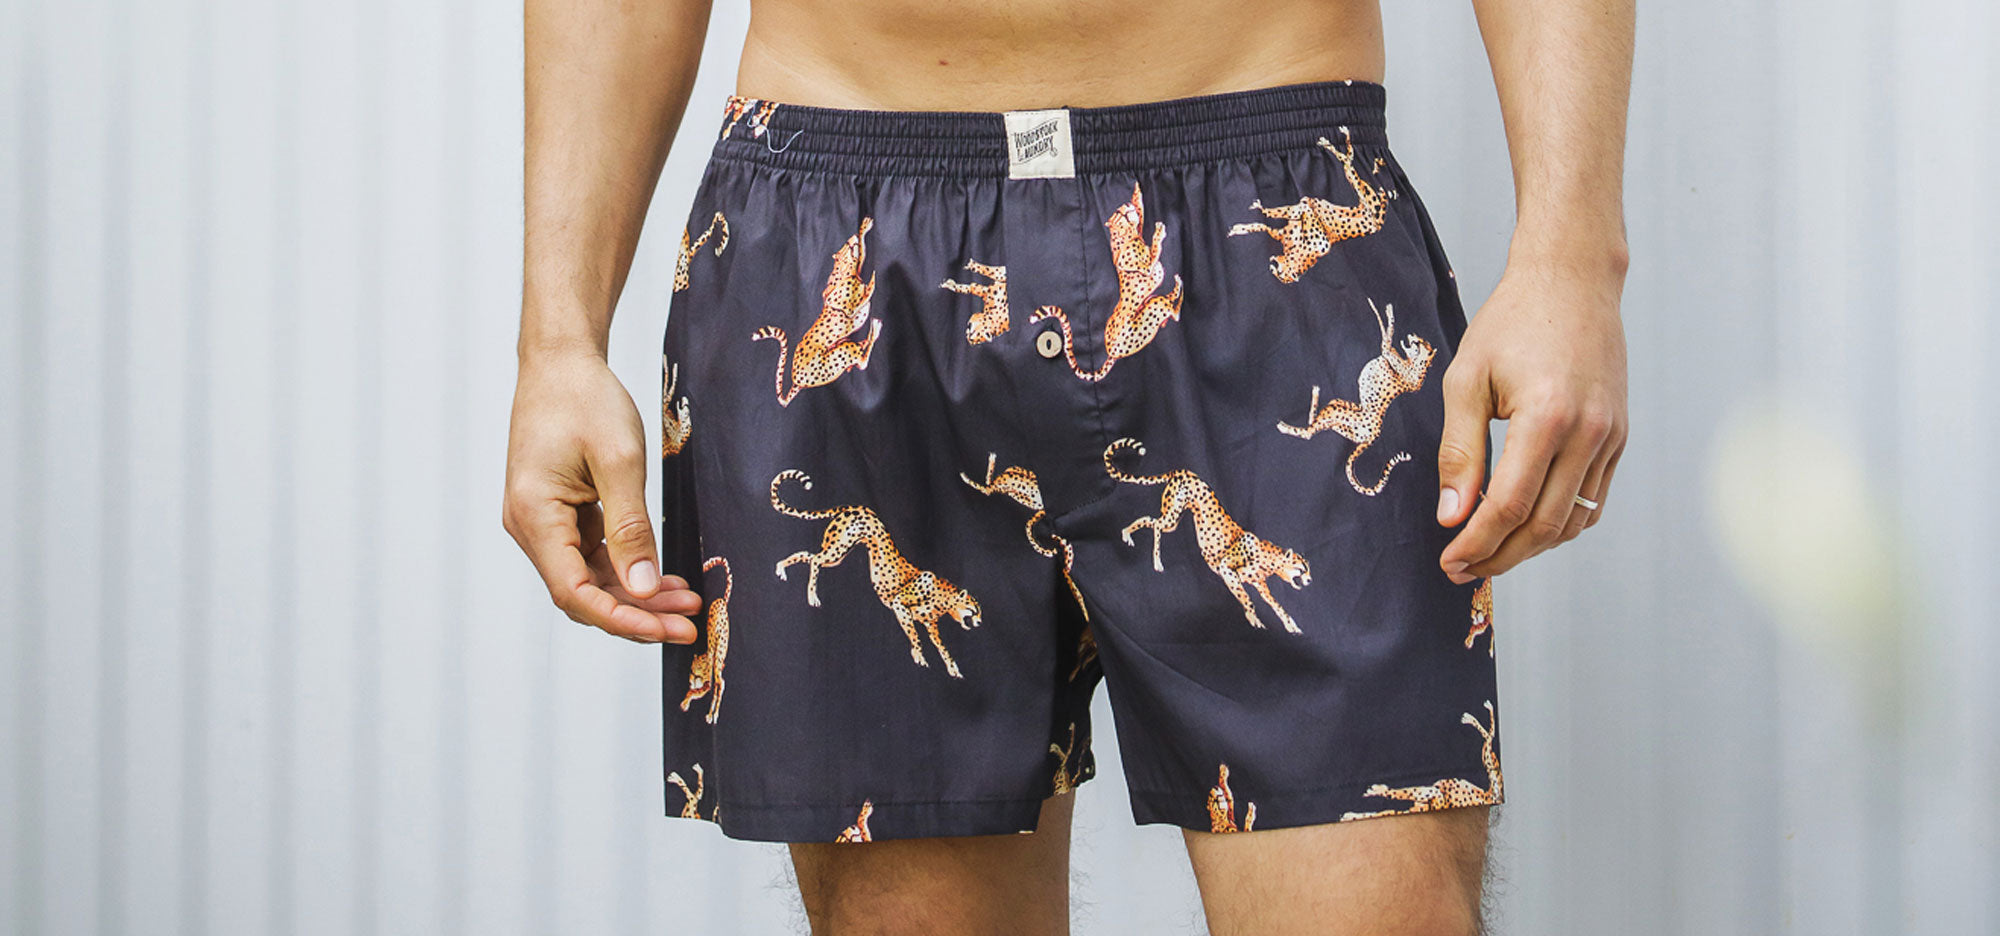 Mens Boxer Shorts Jumping Cheetahs - Woodstock Laundry UK